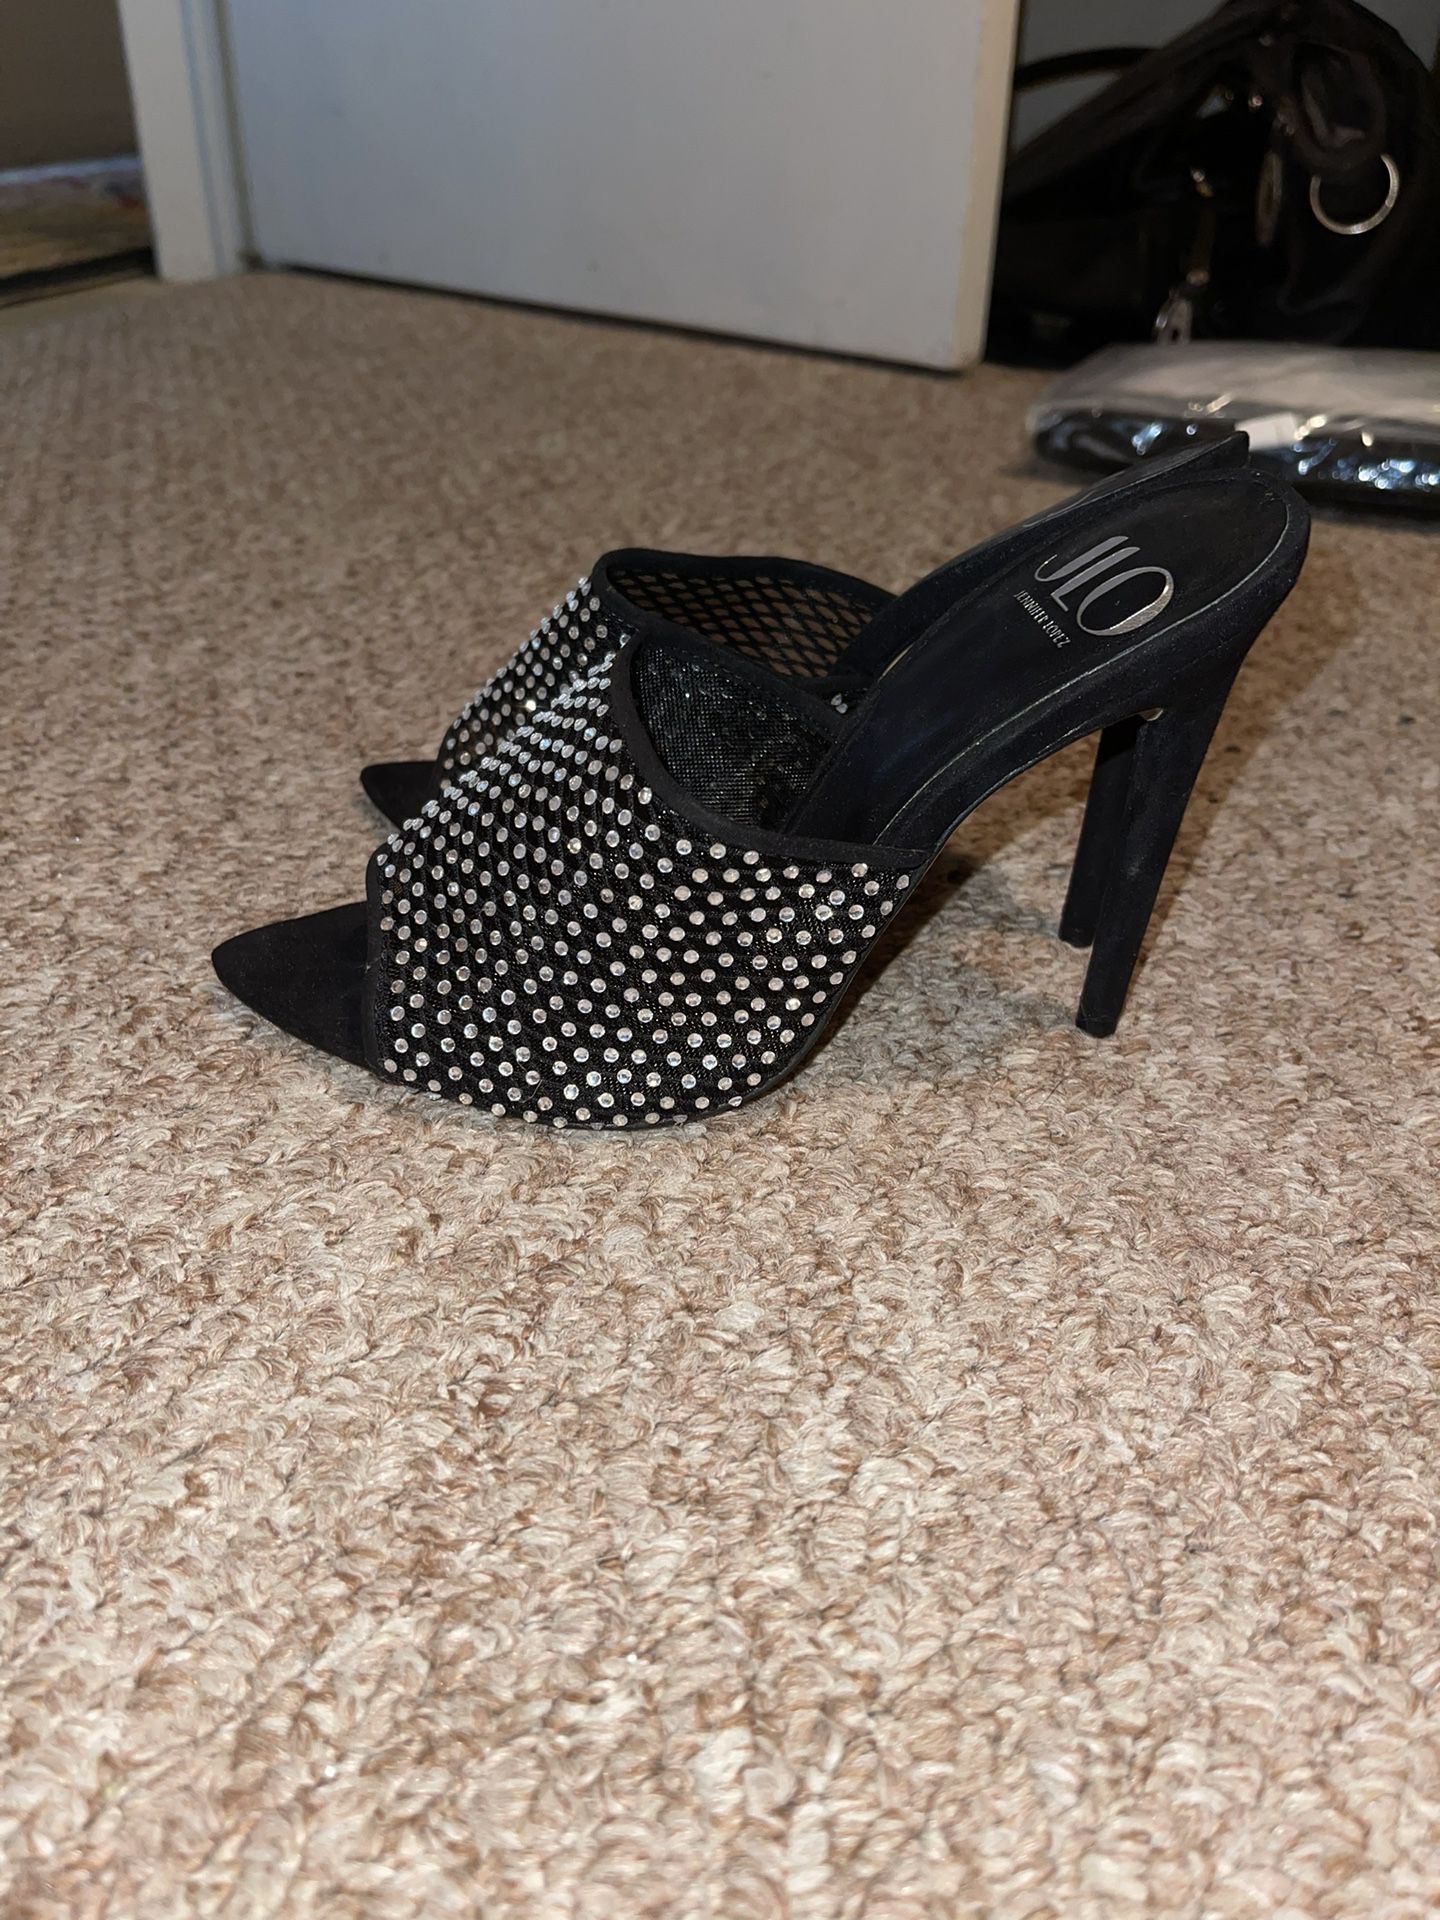 Brand New J Lo Heels!! Size 7 